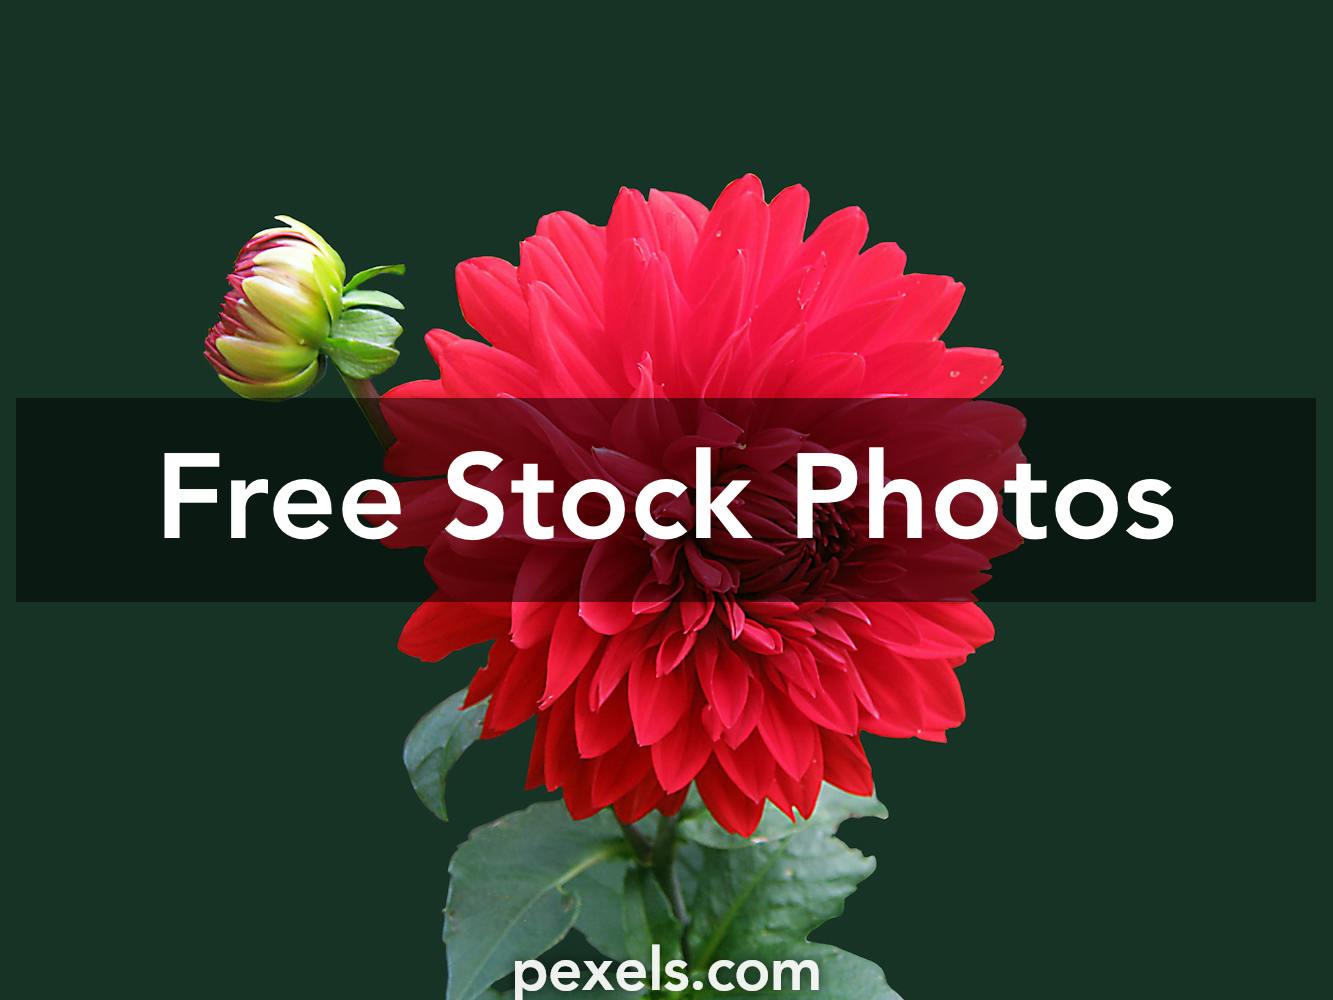 Download 9 000 Best Free Download Photos 100 Free Download Pexels Stock Photos